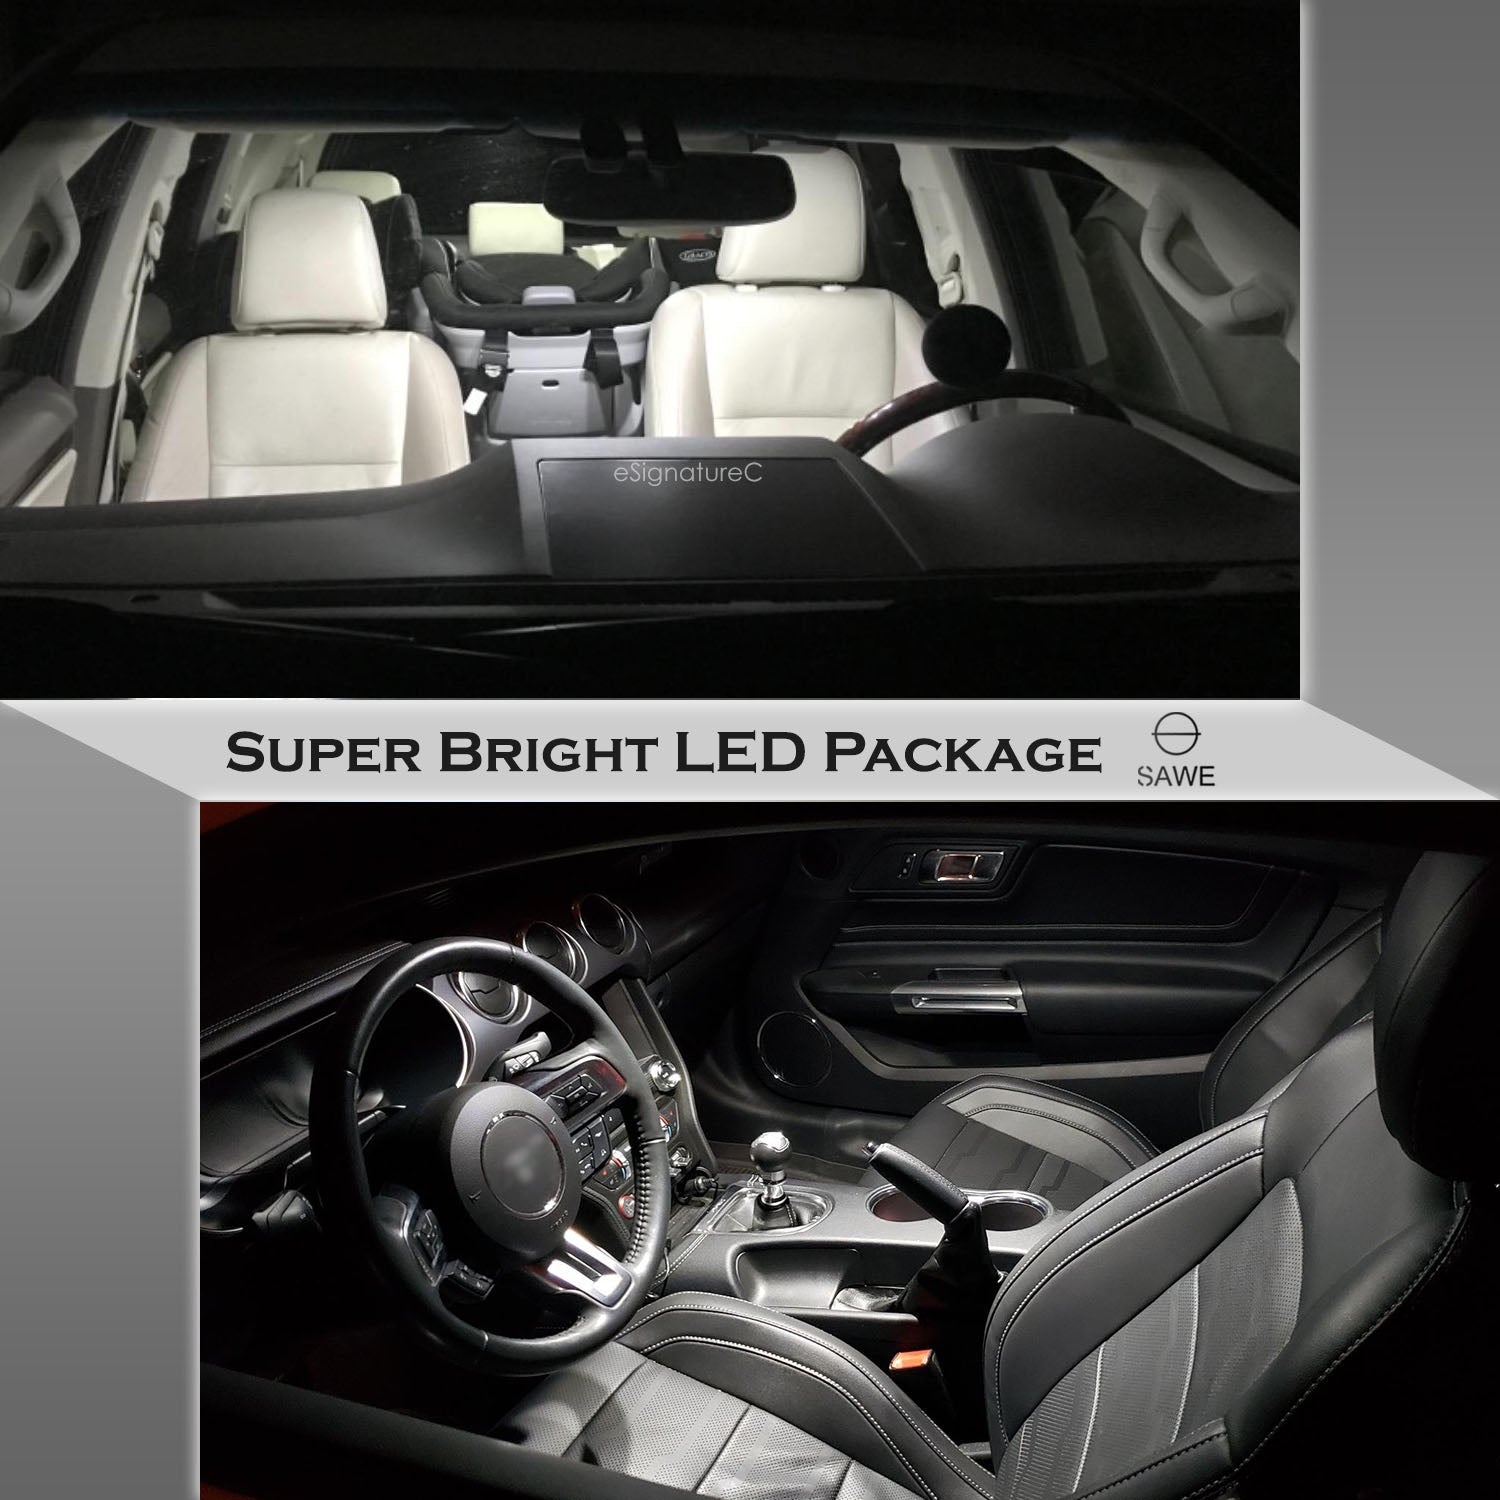 For Volkswagen Golf GTi Interior LED Lights - Dome & Map Light Bulbs Package Kit for 2010 - 2017 - White